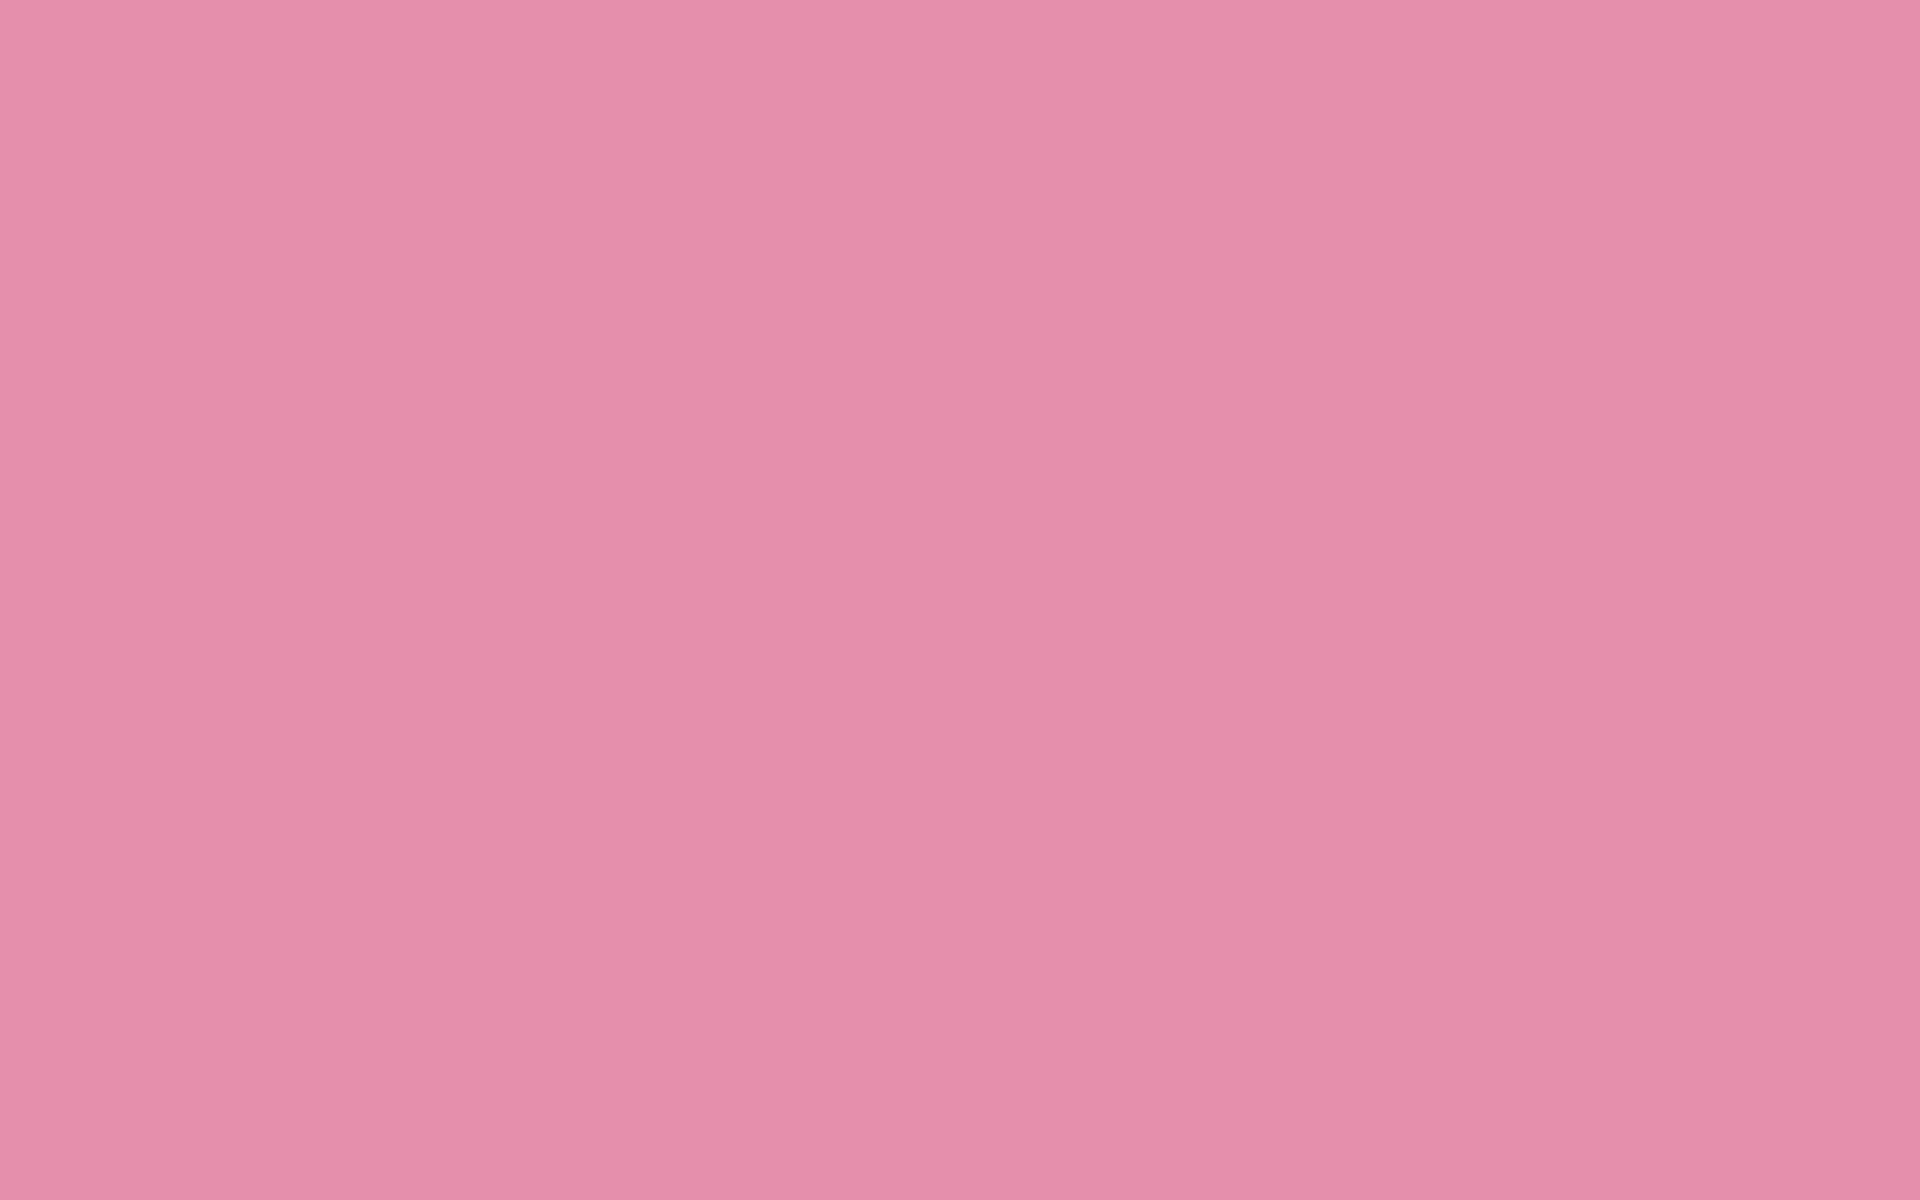 Solid Light Pink Background Pink solid color background